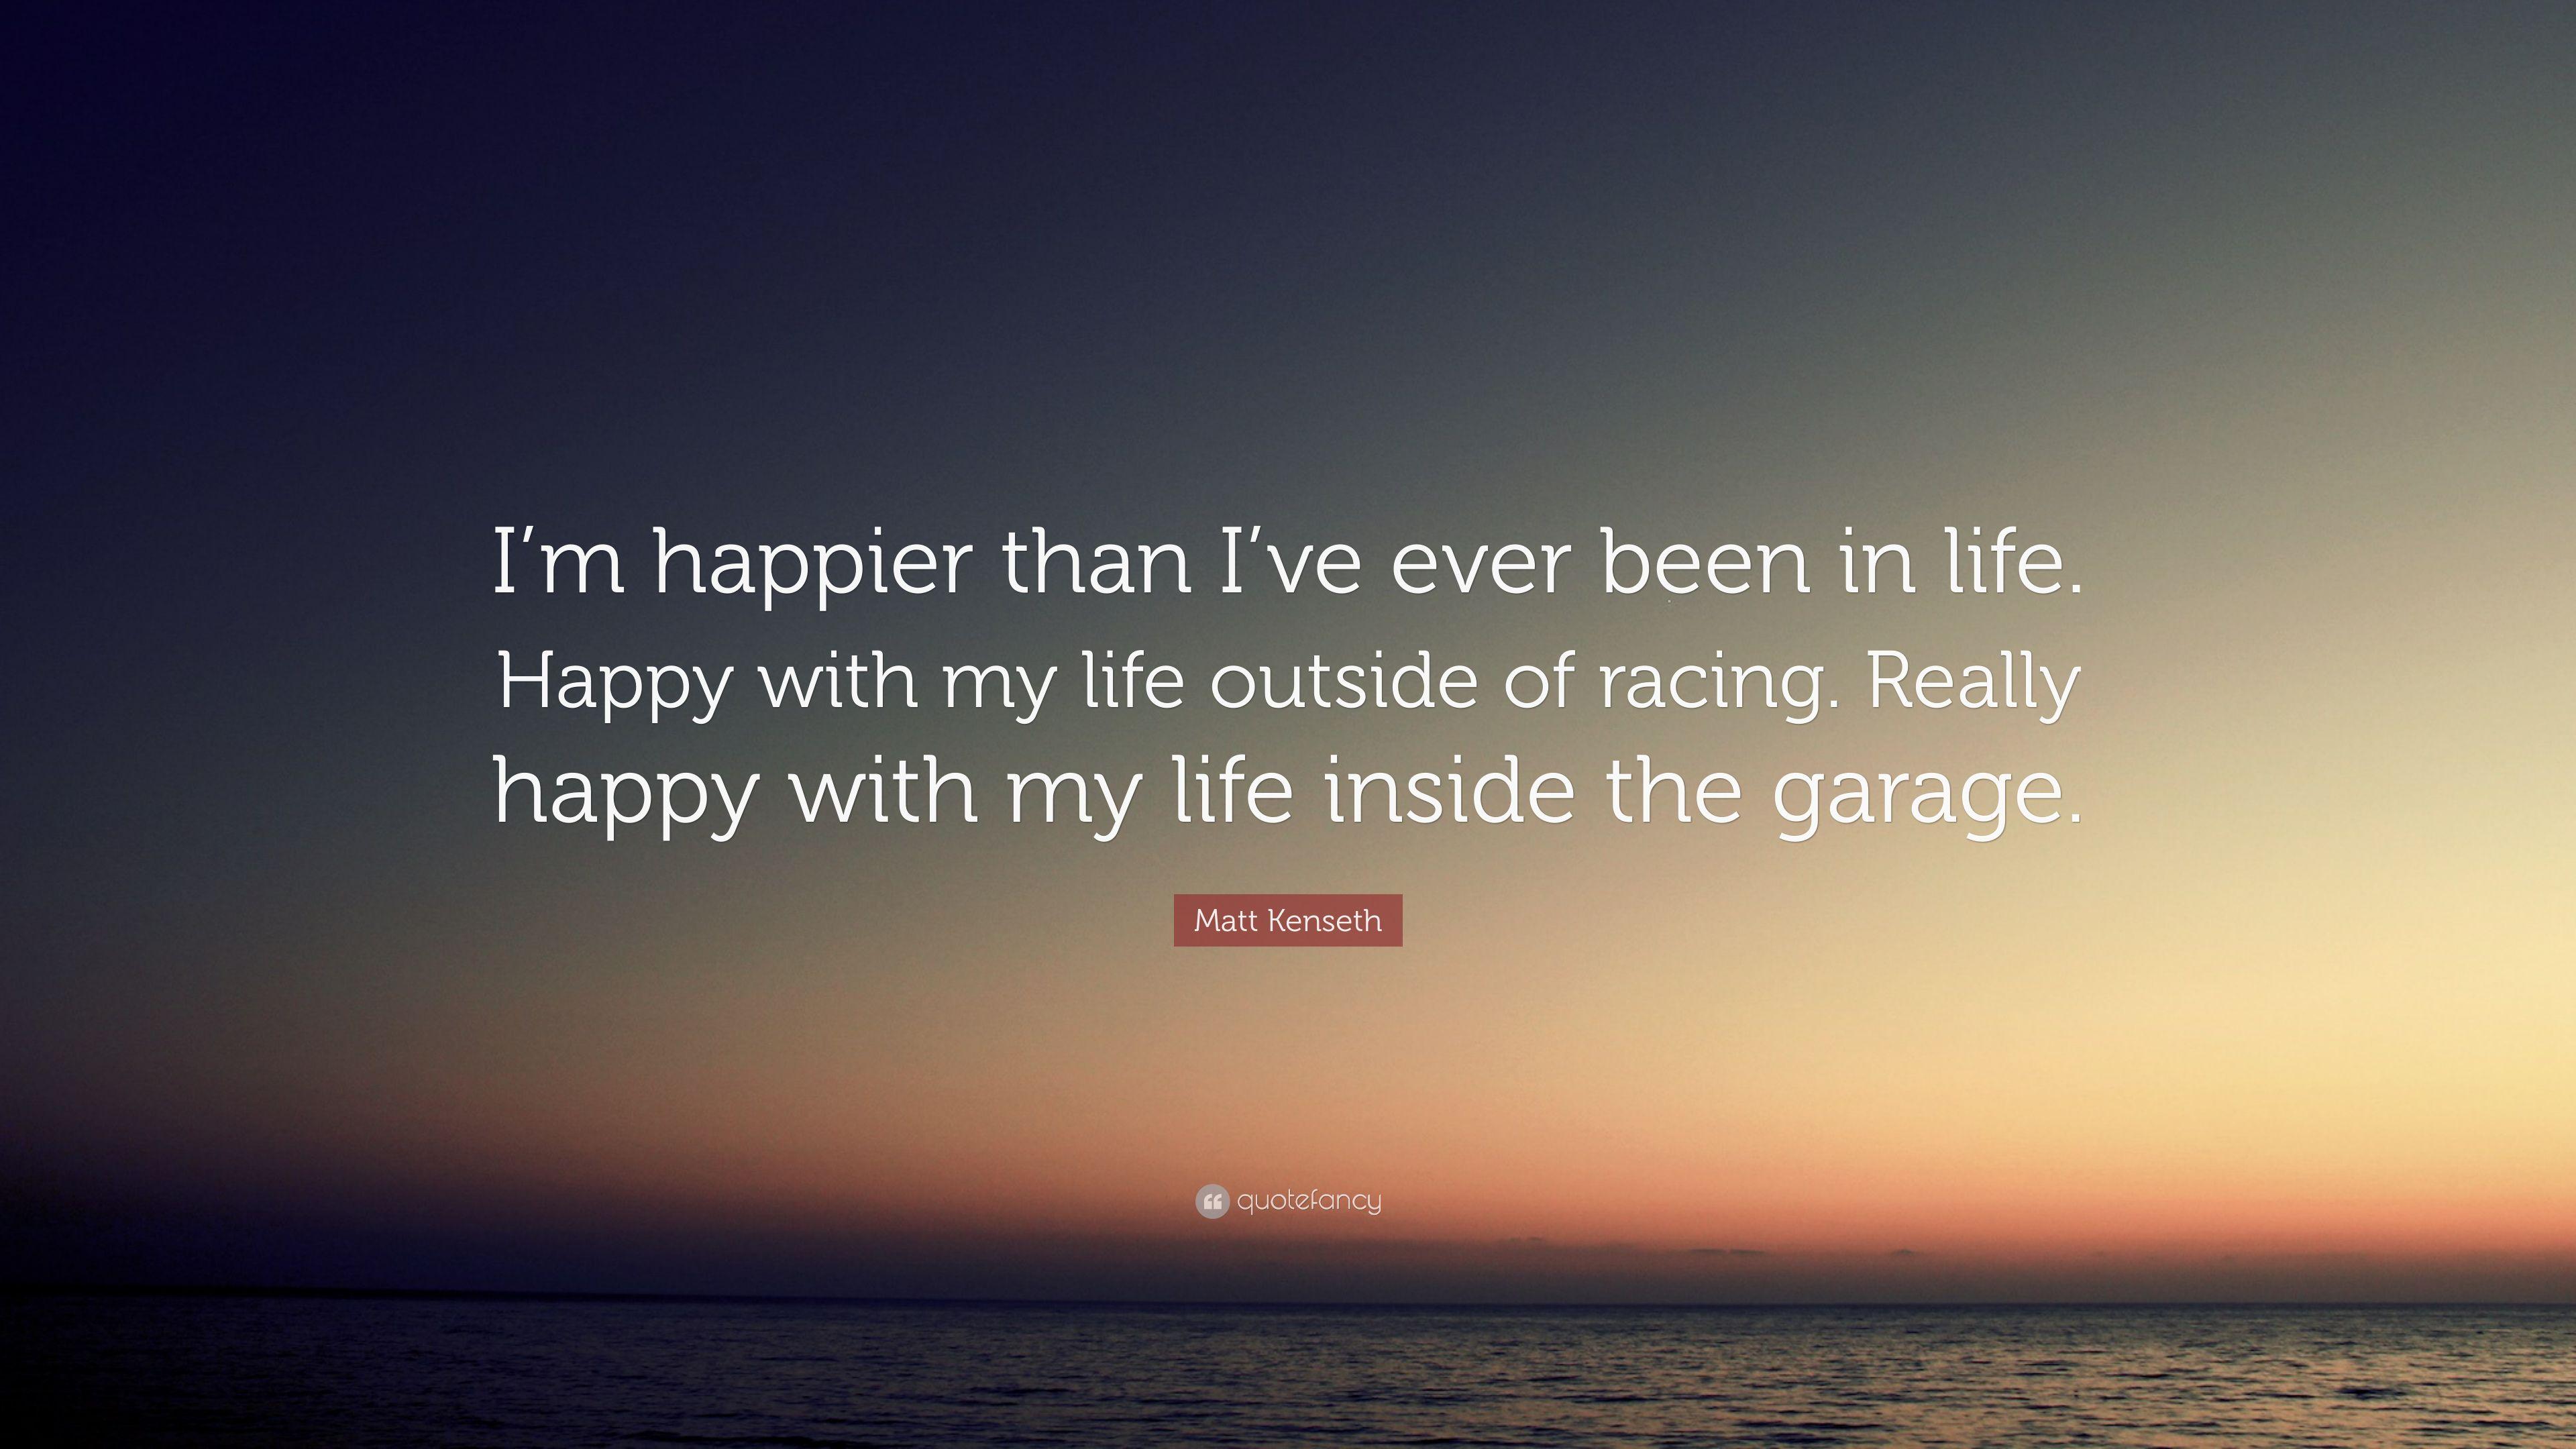 Matt Kenseth Quote: “I'm happier than I've ever been in life. Happy